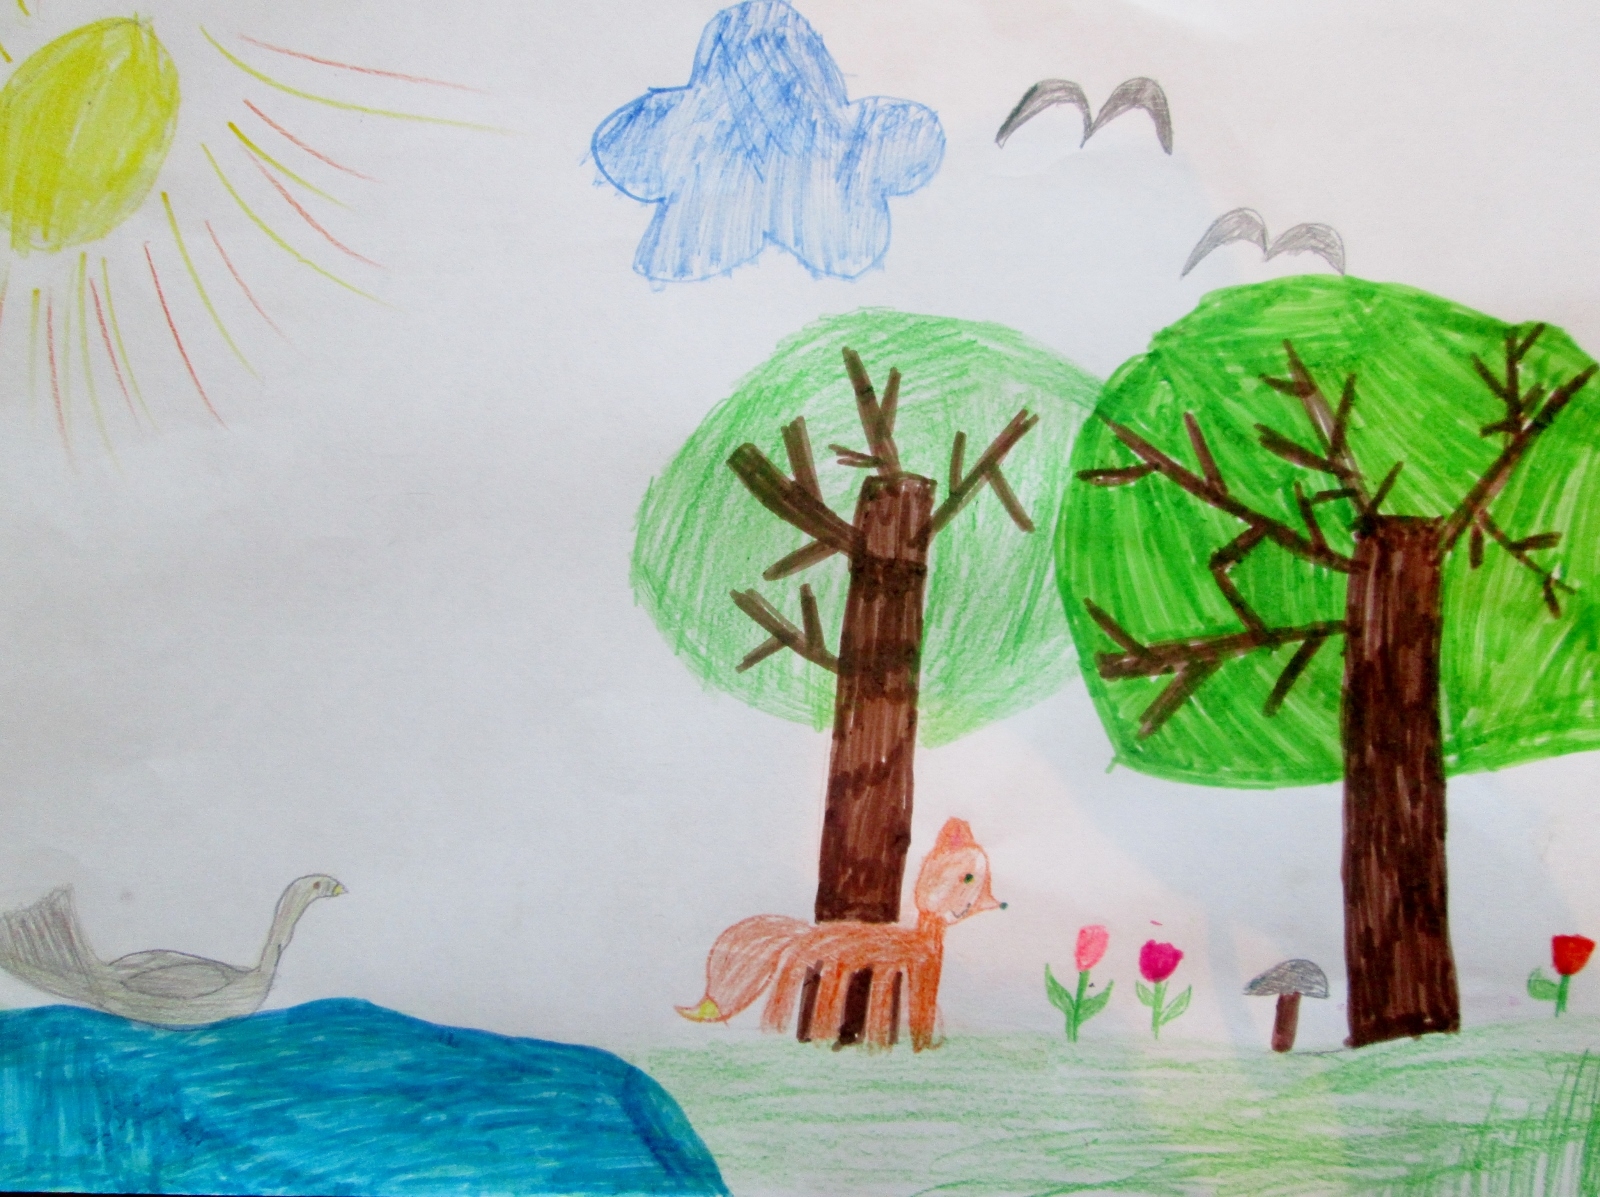 Рисунок лес глазами детей. Лес глазами детей. Детский рисунок на тему лес будущего. Лес глазами детей конкурс. Лес глазами детей рисунки.